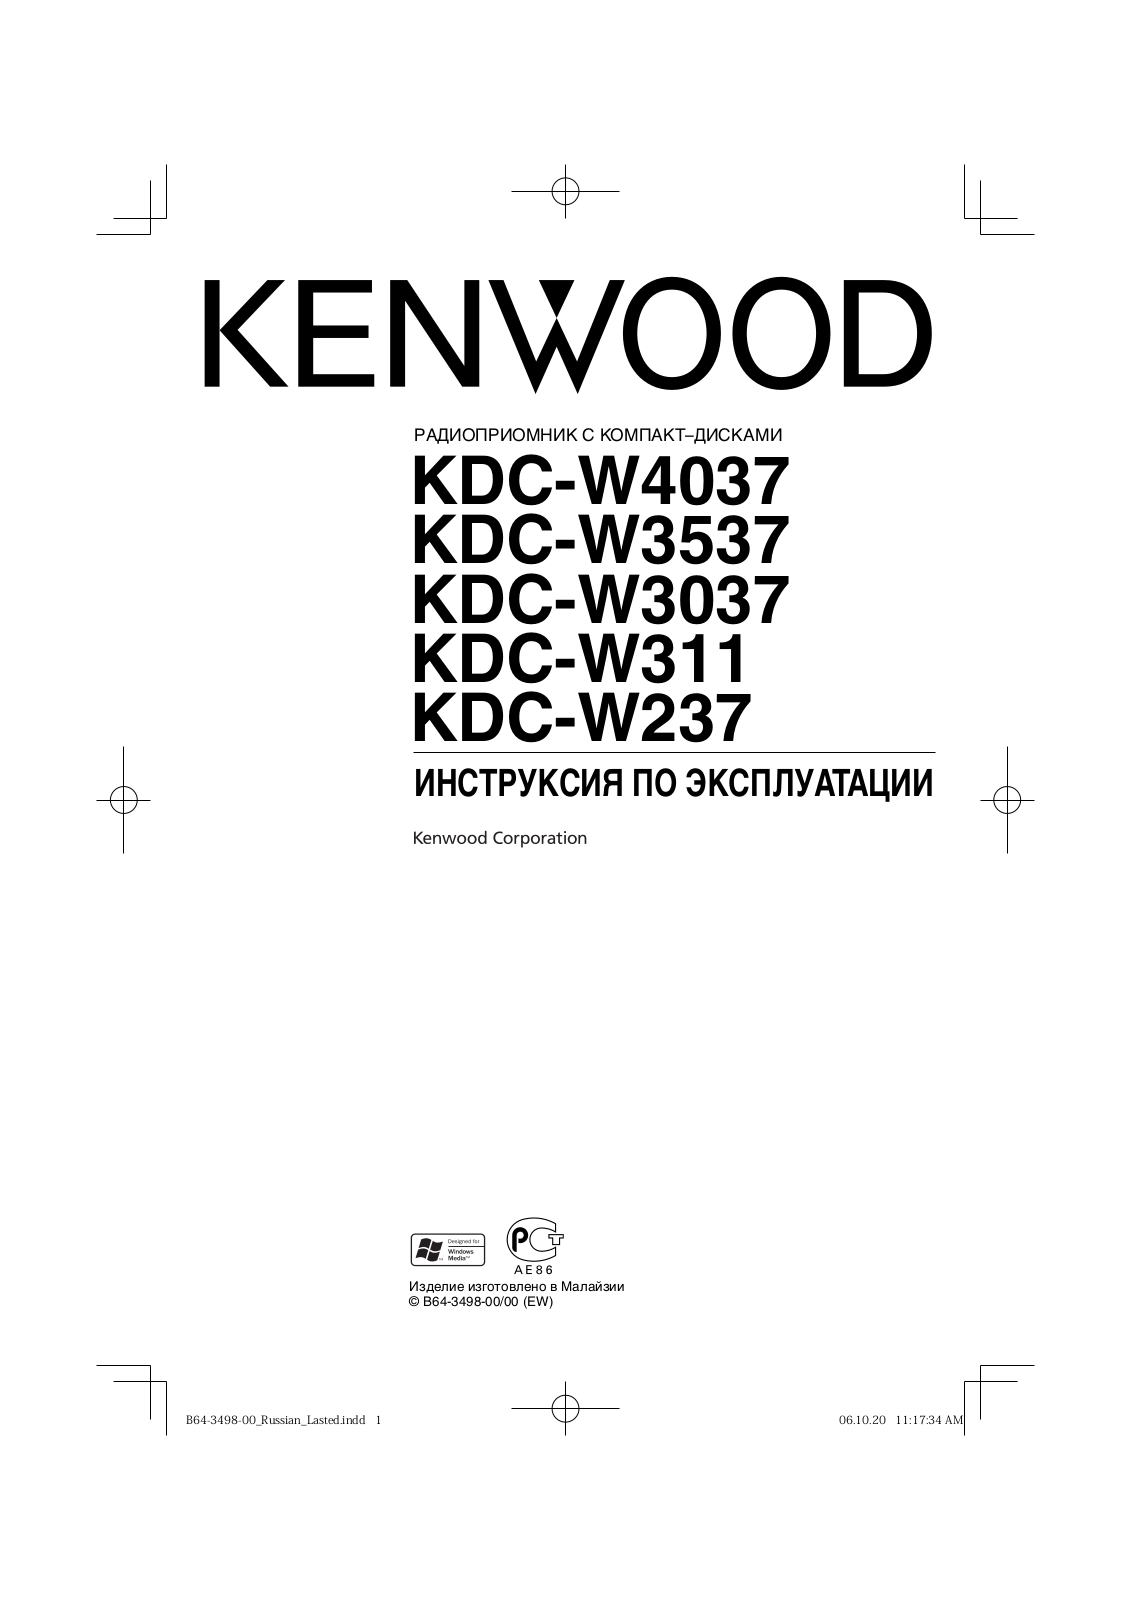 Kenwood KDC-W237GY User Manual